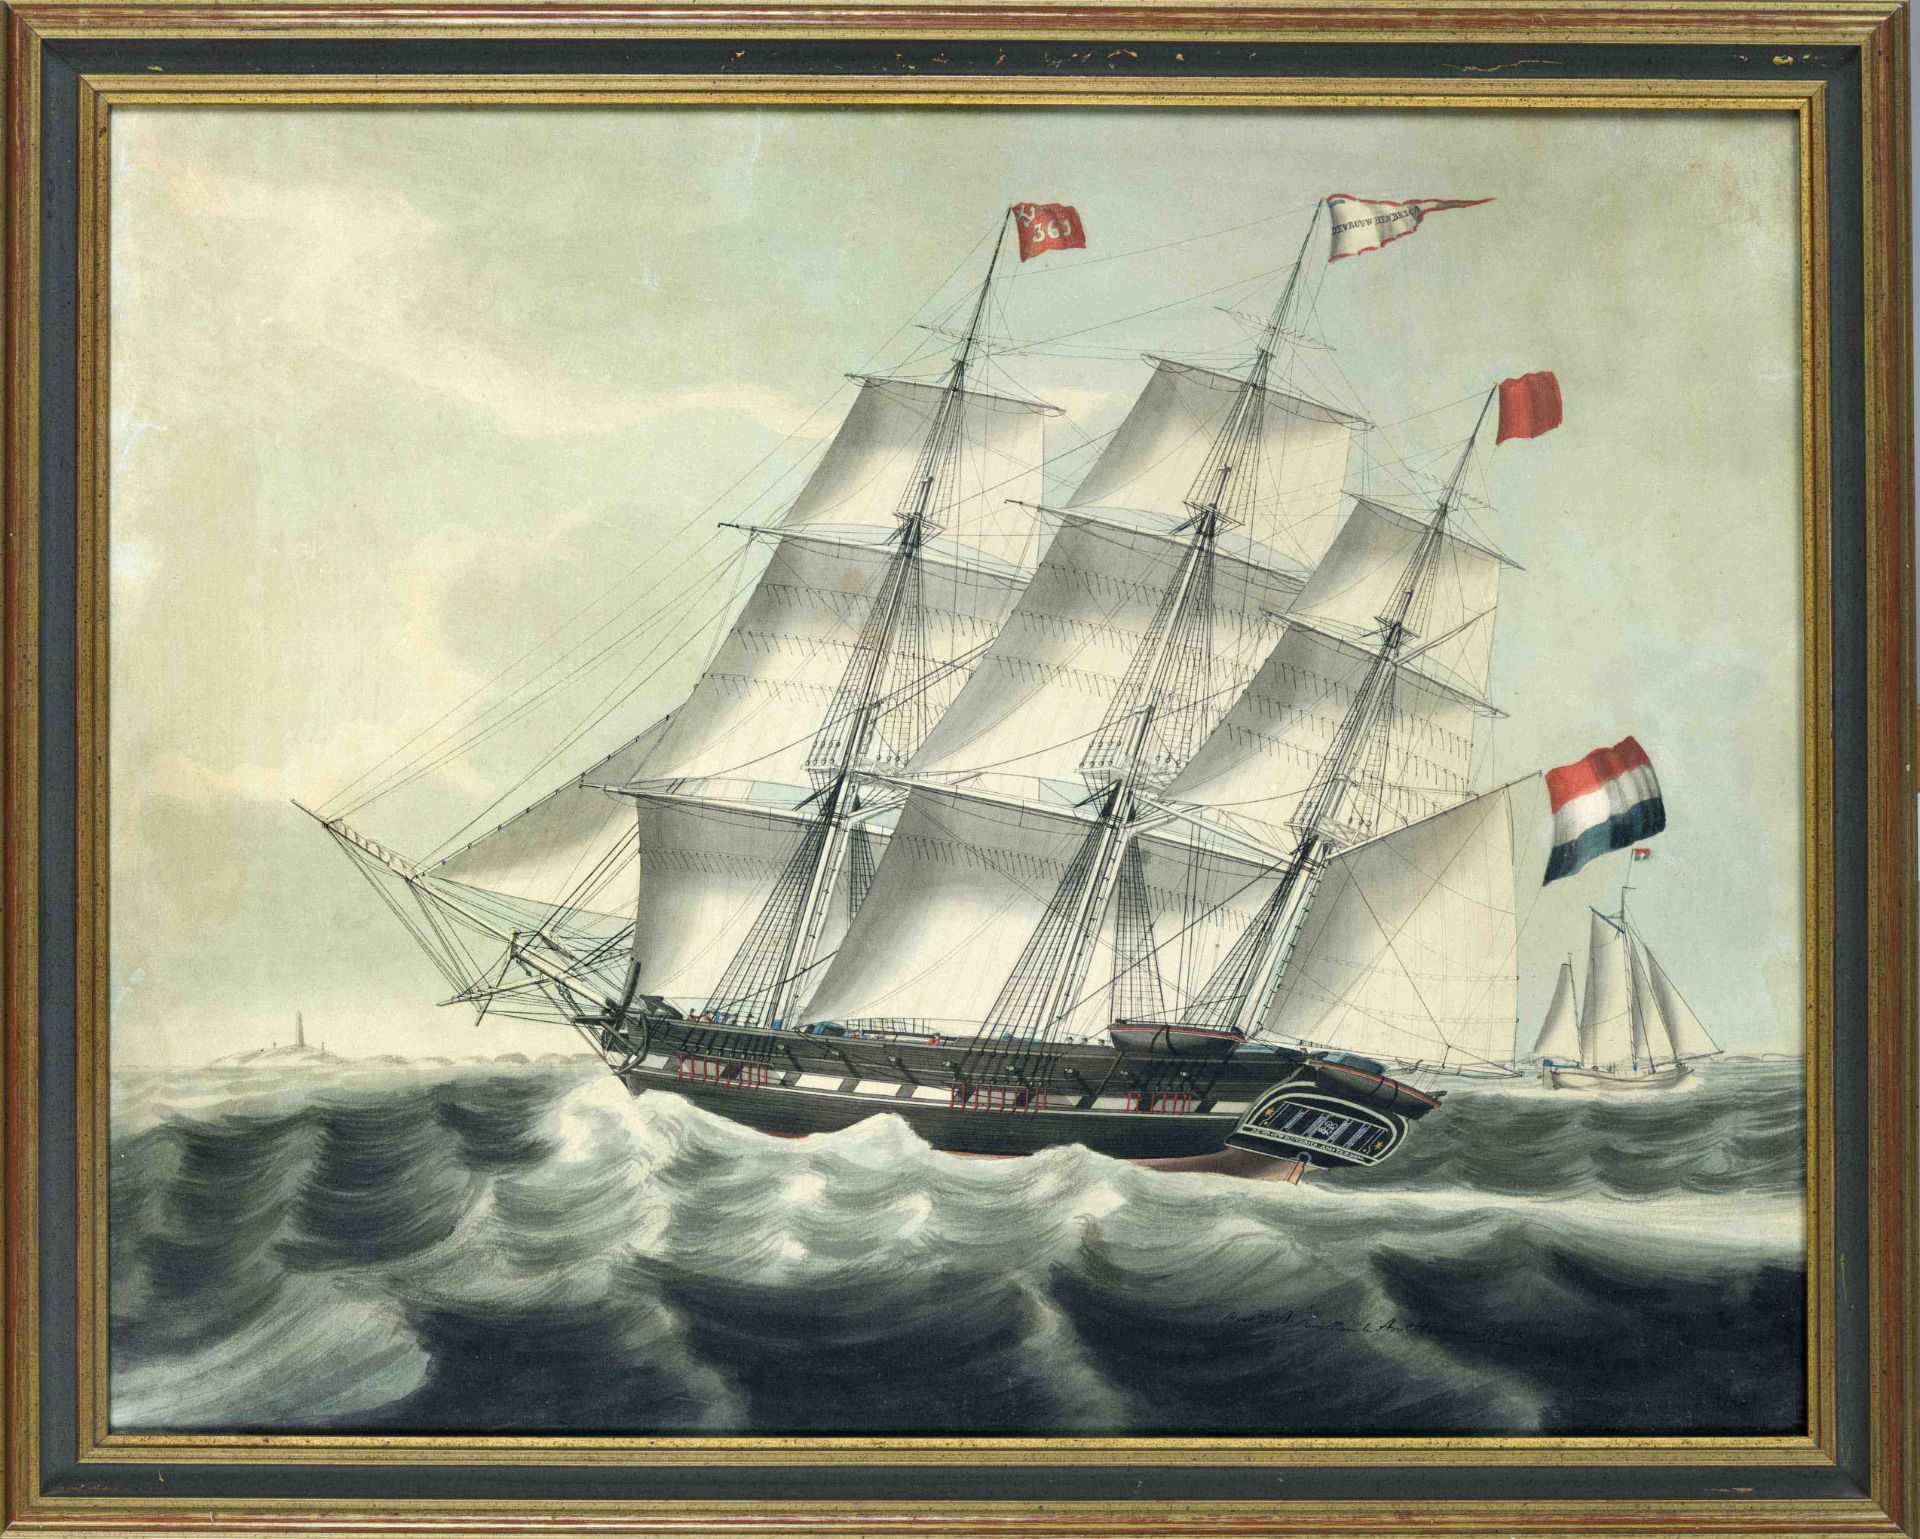 Anonymous 19th/20th century marine painter, Captain's portrait of the Dutch frigate Hendrica,